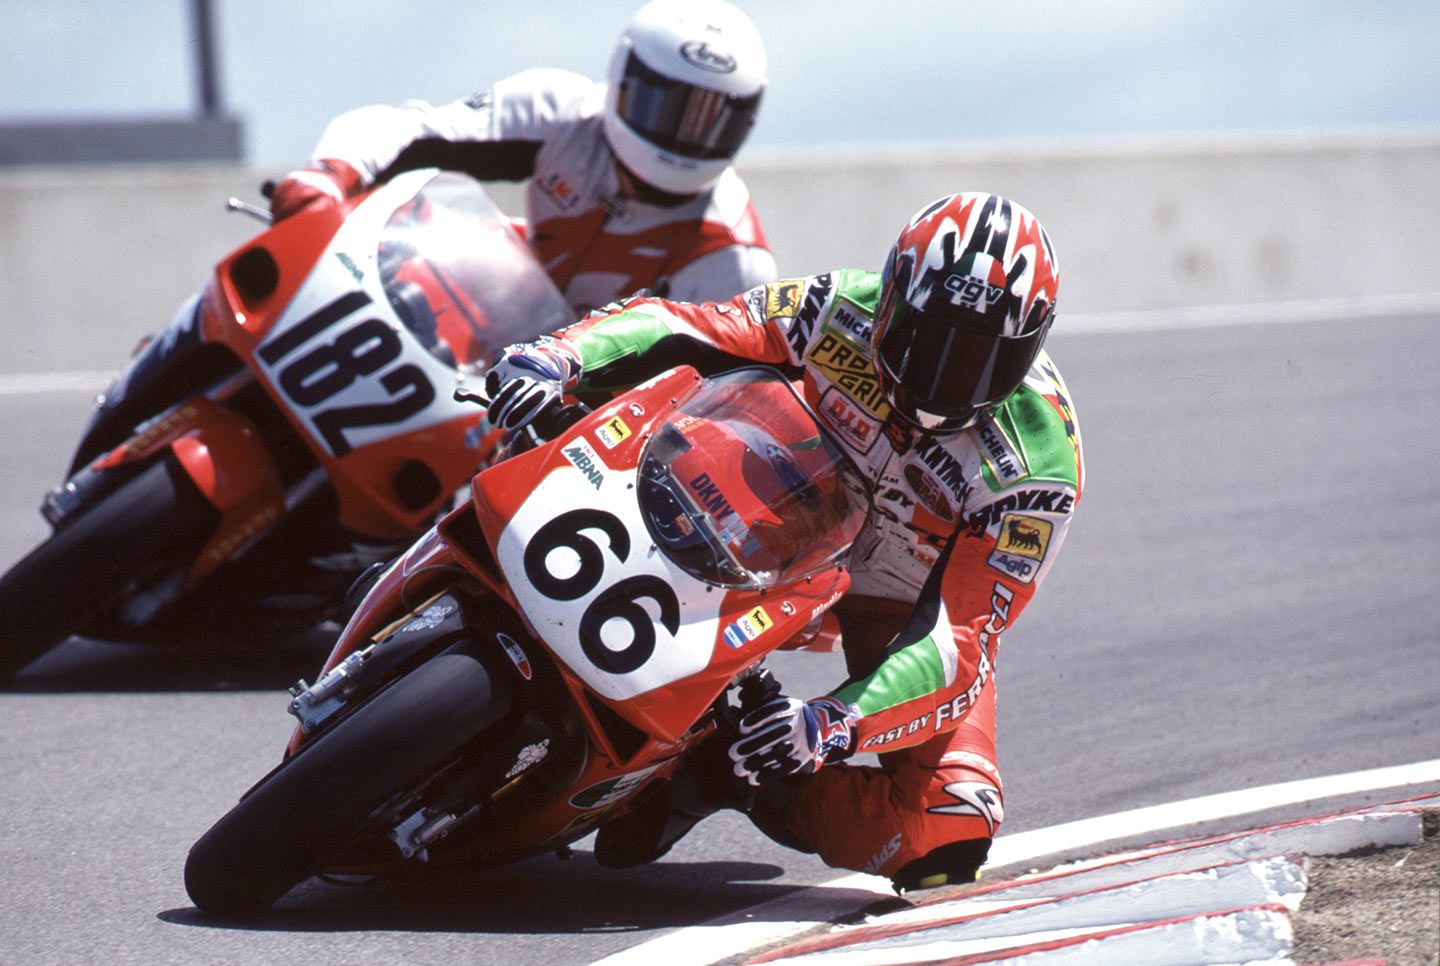 On the Ferracci Ducati 916 in ’97.